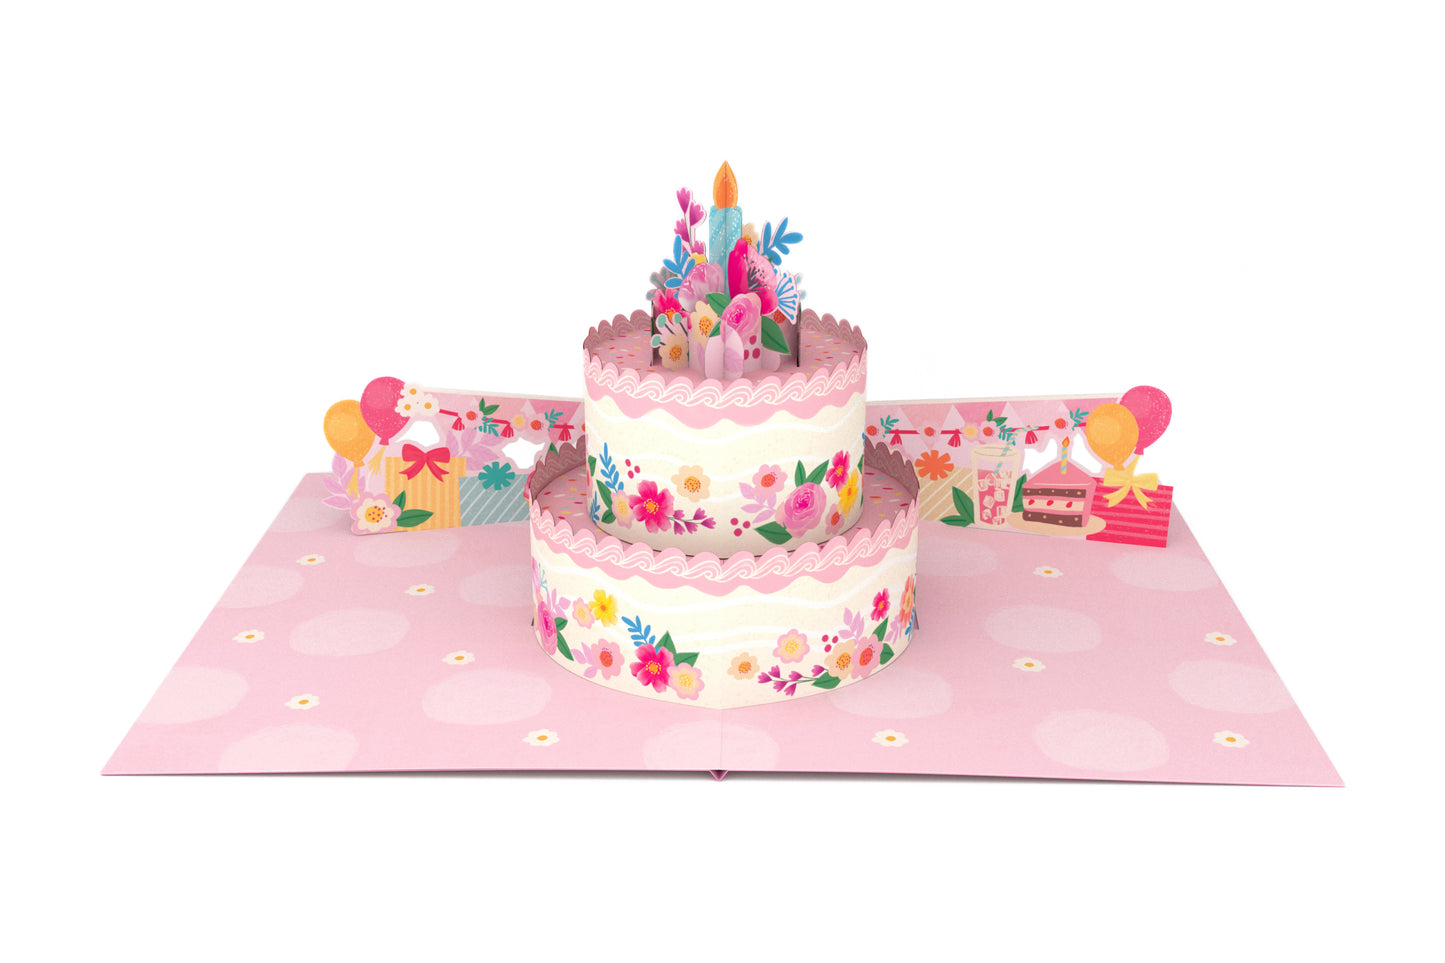 Floral Birthday Cake Pop-Up Card